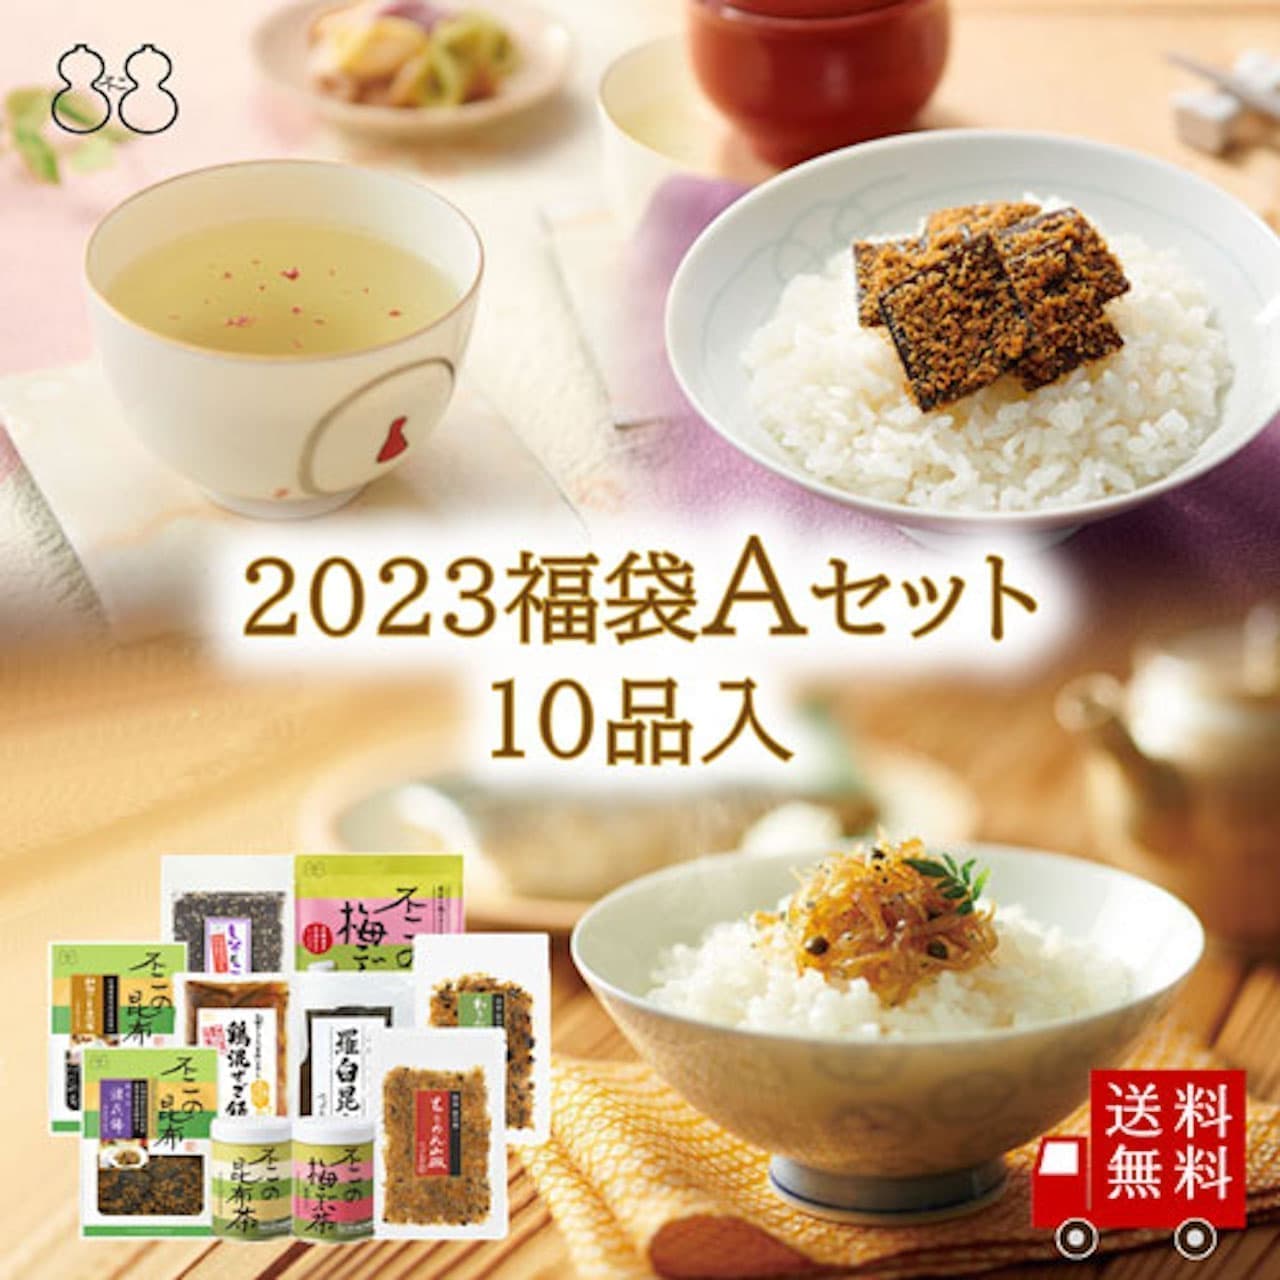 Fuji Foods "2023 Fukubukuro" FUKUCHI BUKURY